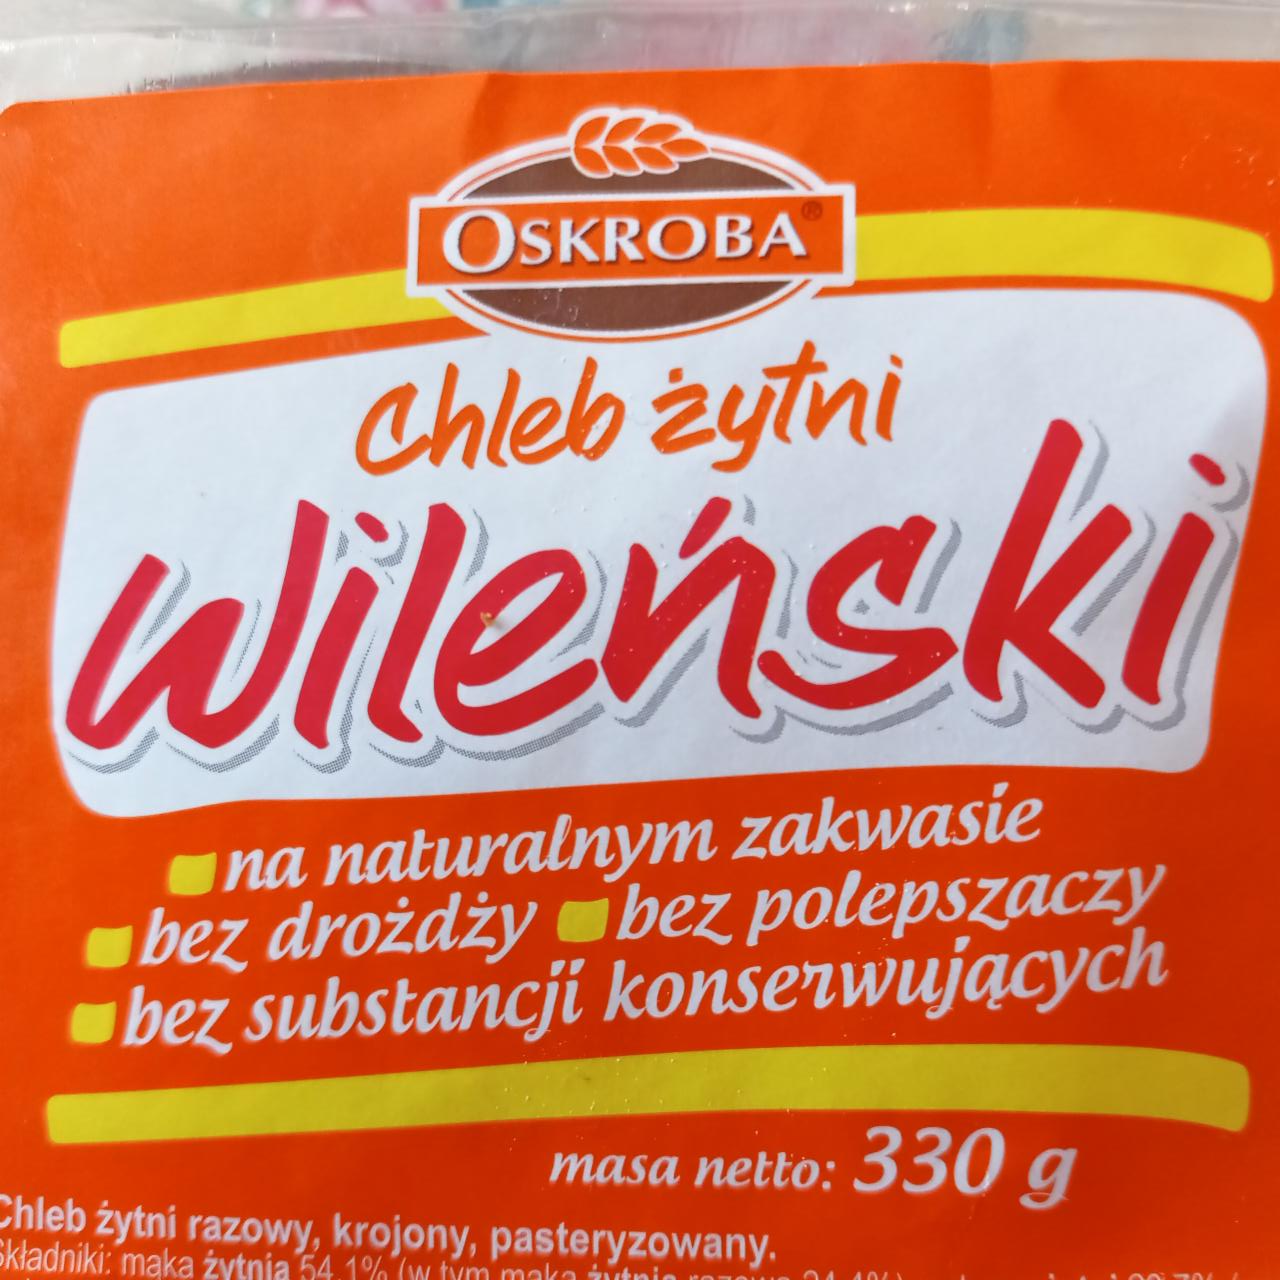 Zdjęcia - Oskroba Chleb żytni wileński 330 g